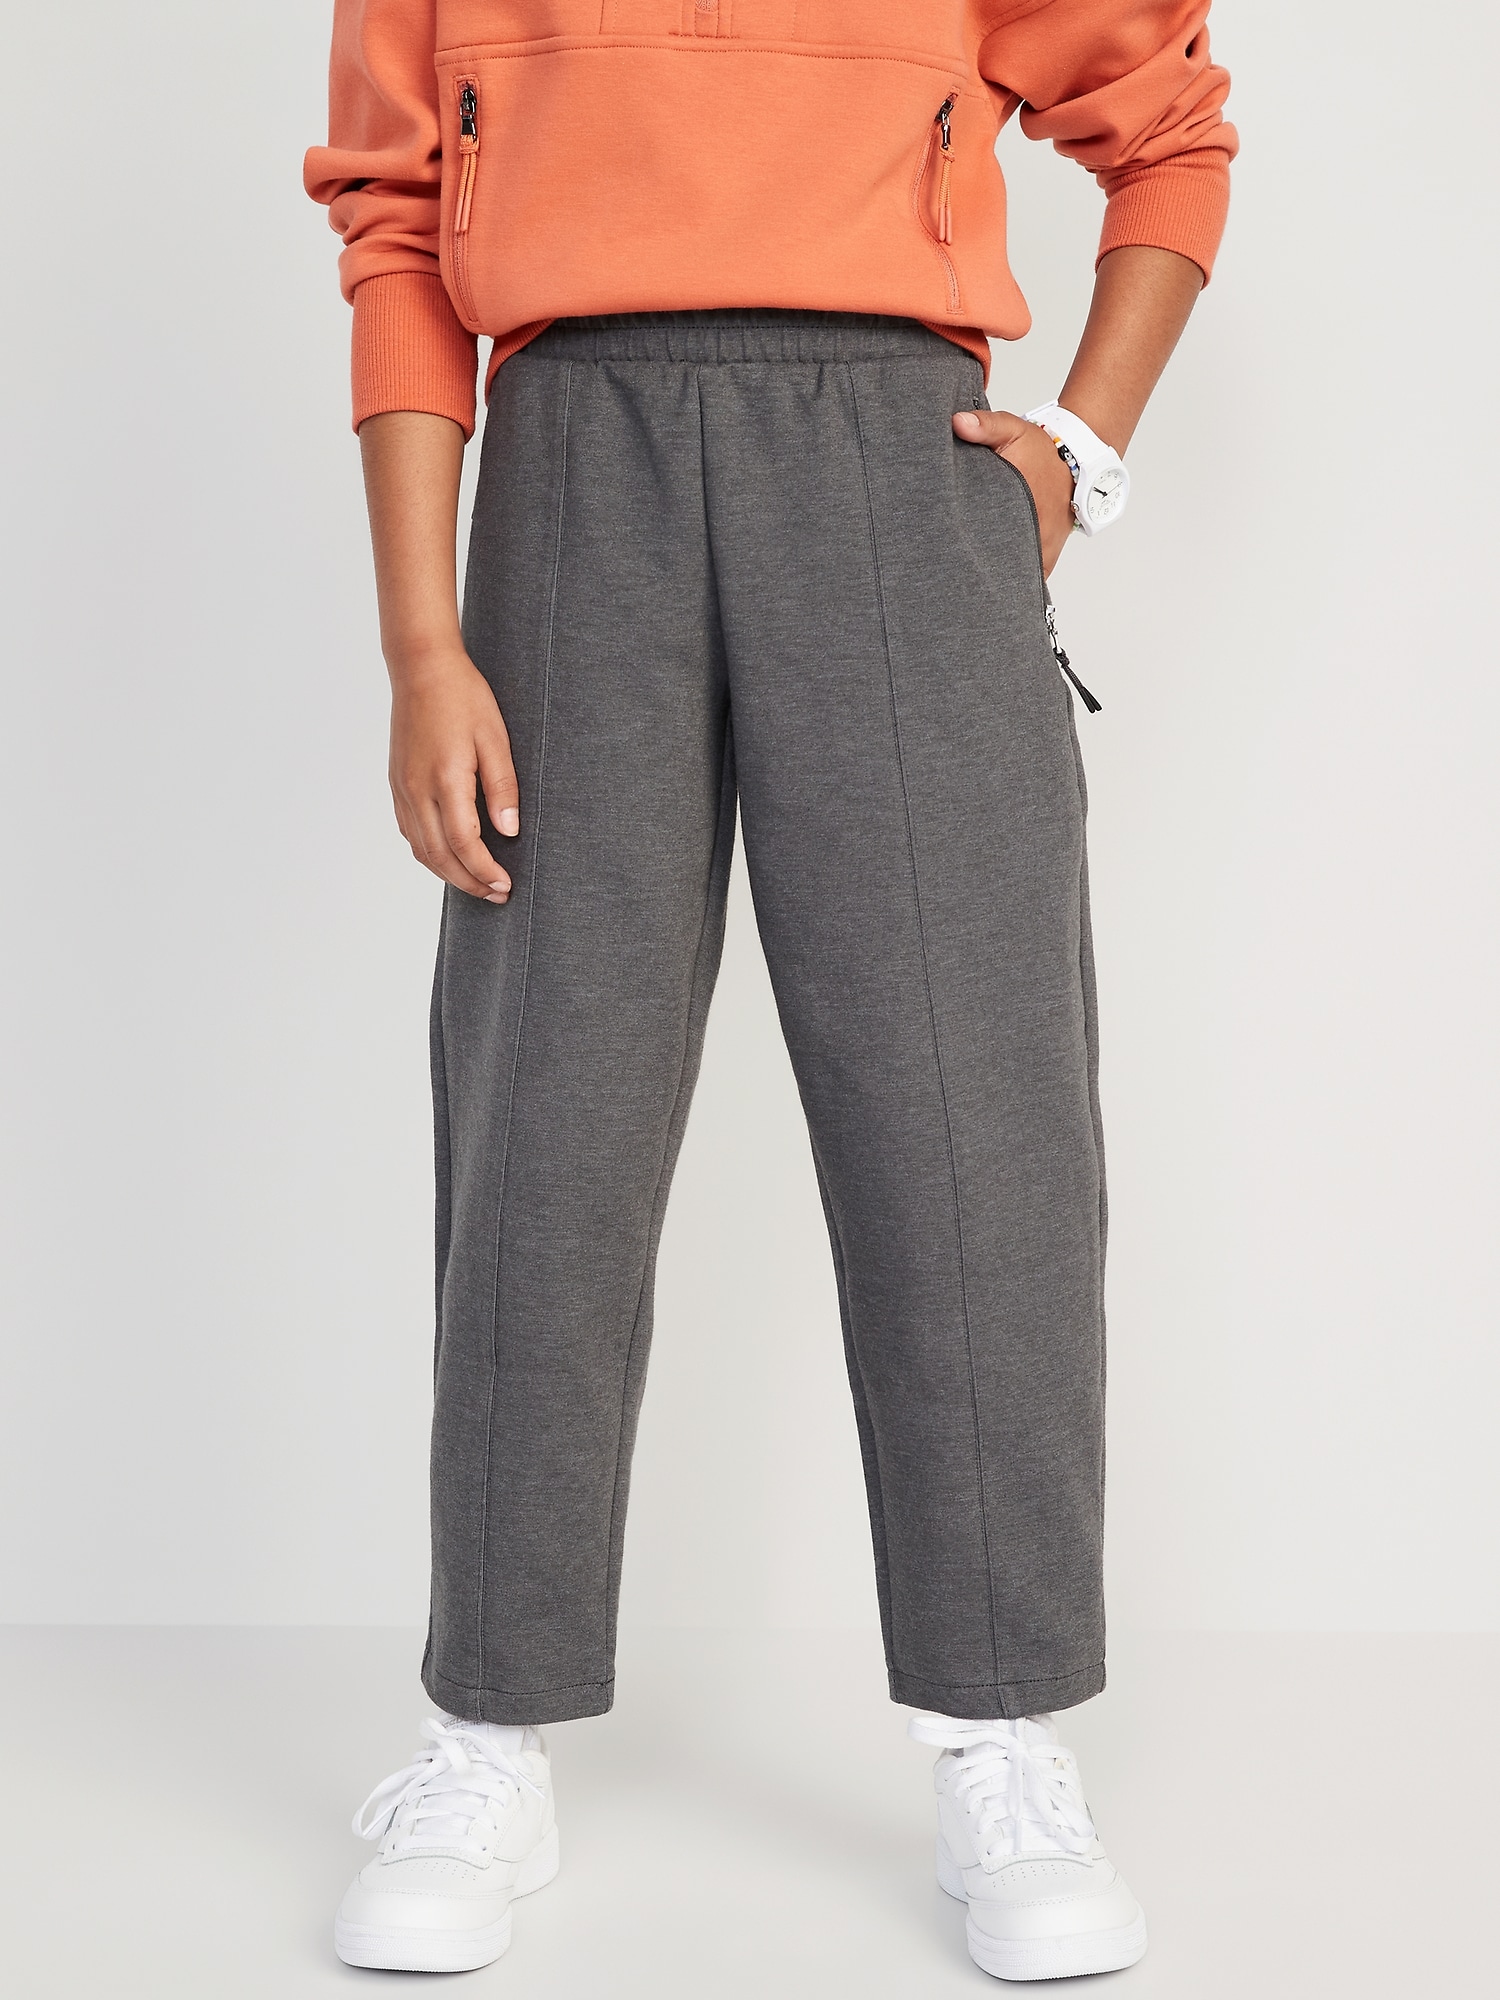 Old Navy Dynamic Fleece Zip-Pocket Sweatpants for Girls